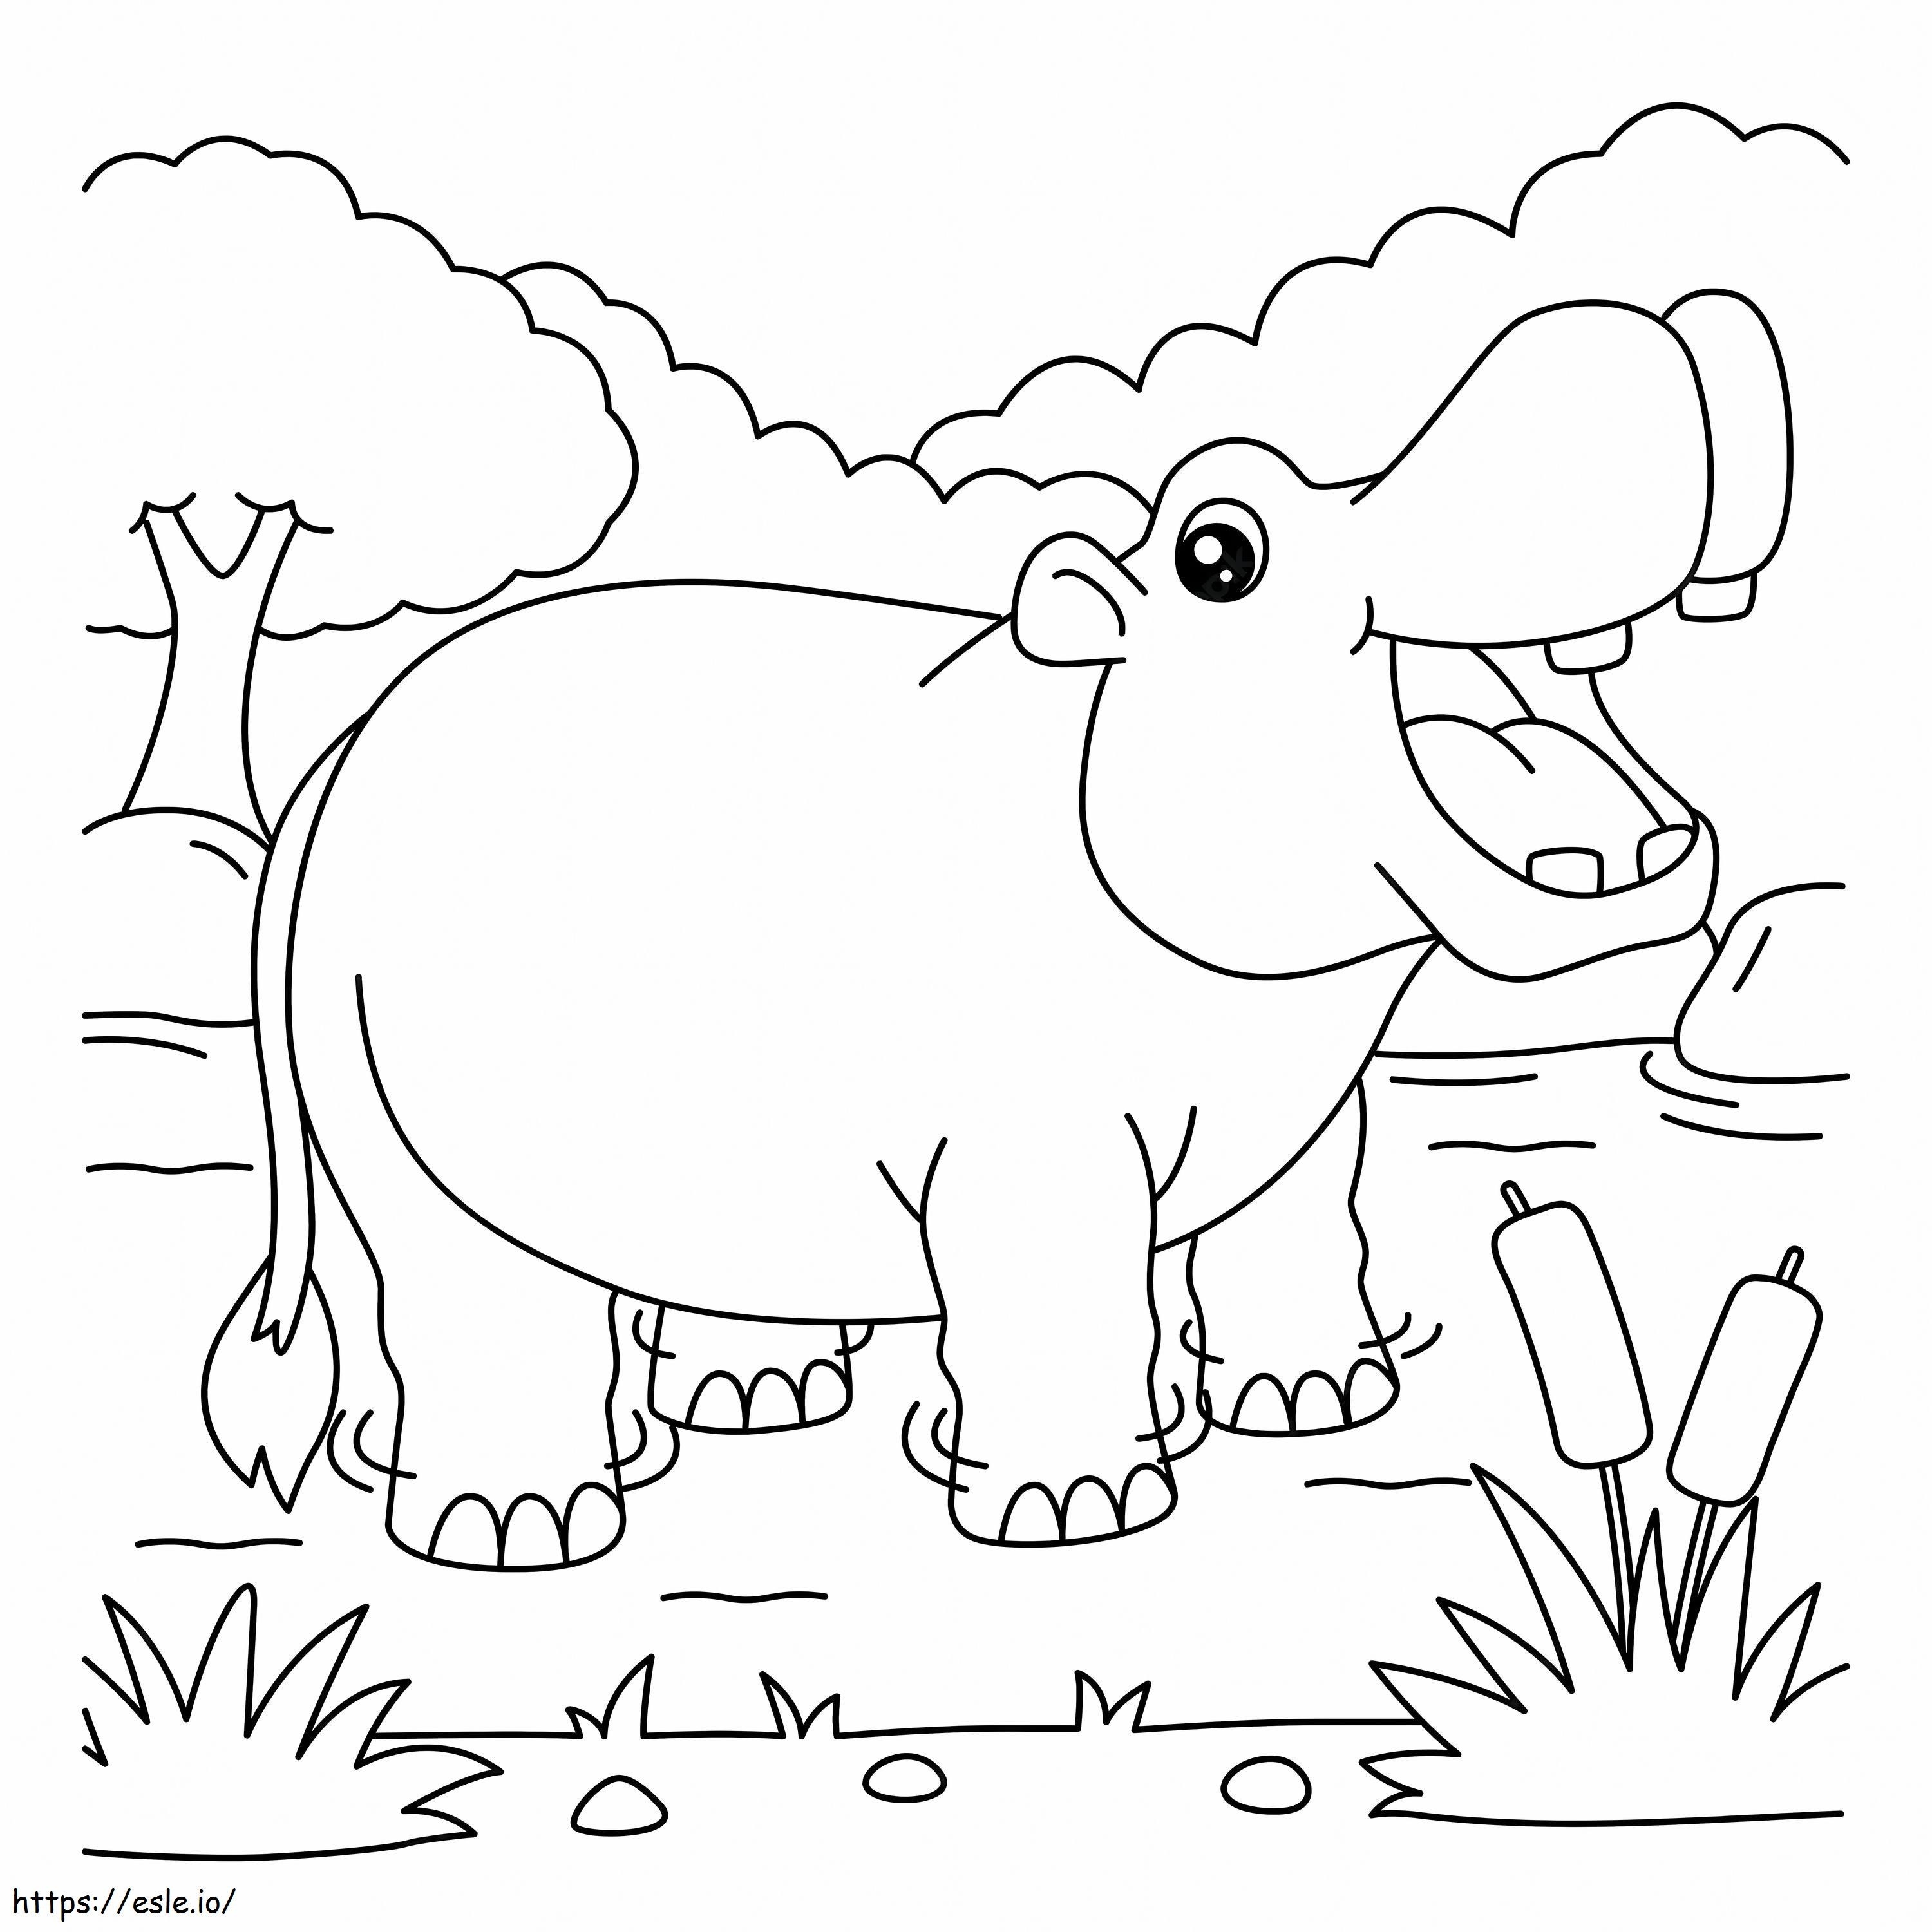 Cartoon Hippopotamus coloring page